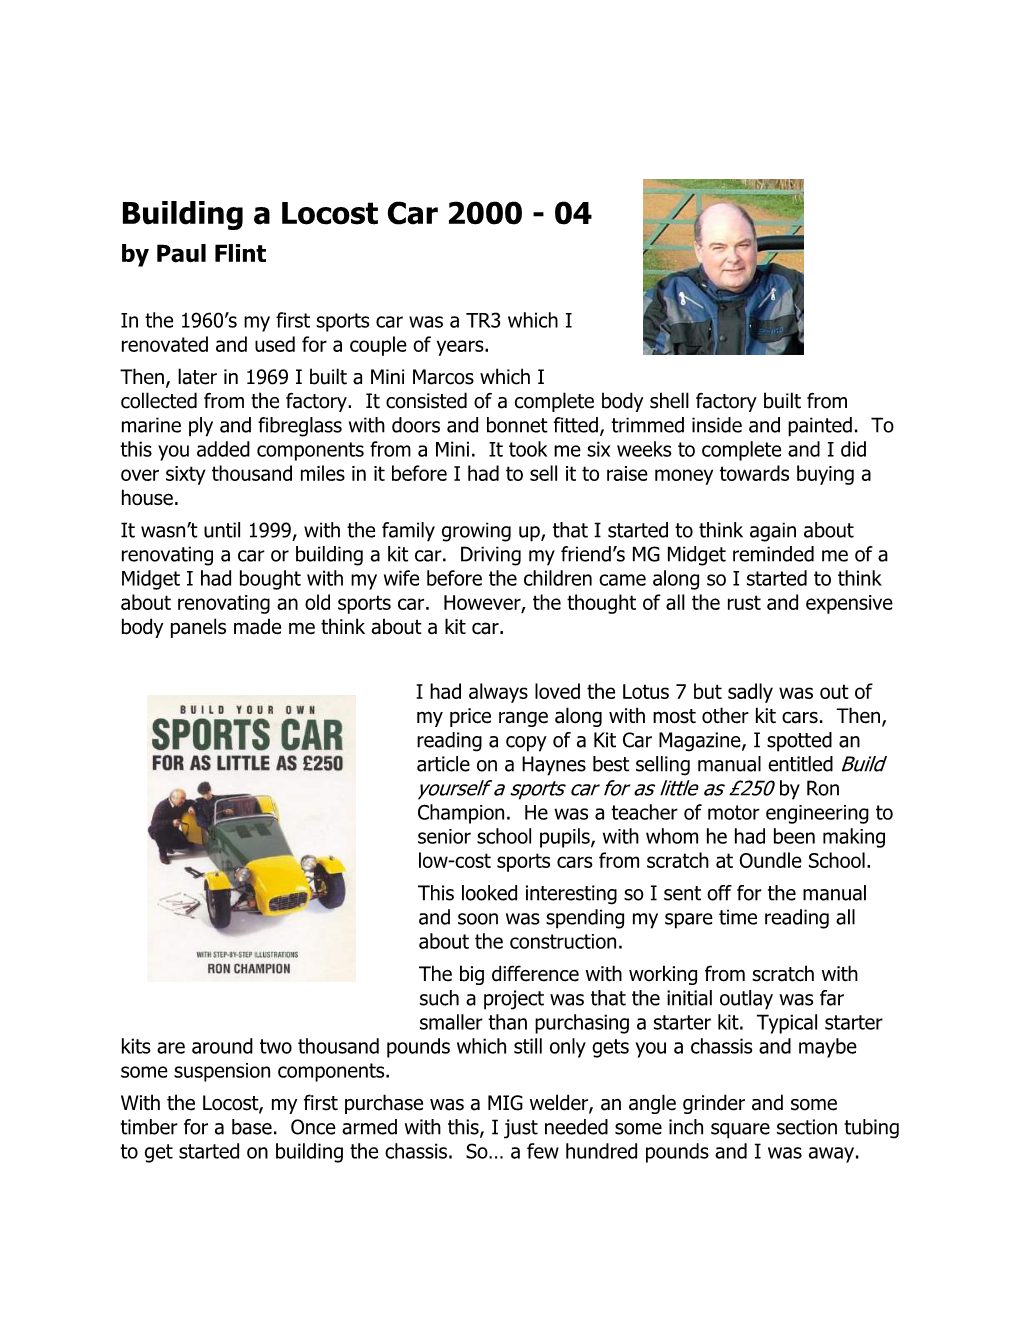 Building a Locost Car 2000 - 04 by Paul Flint